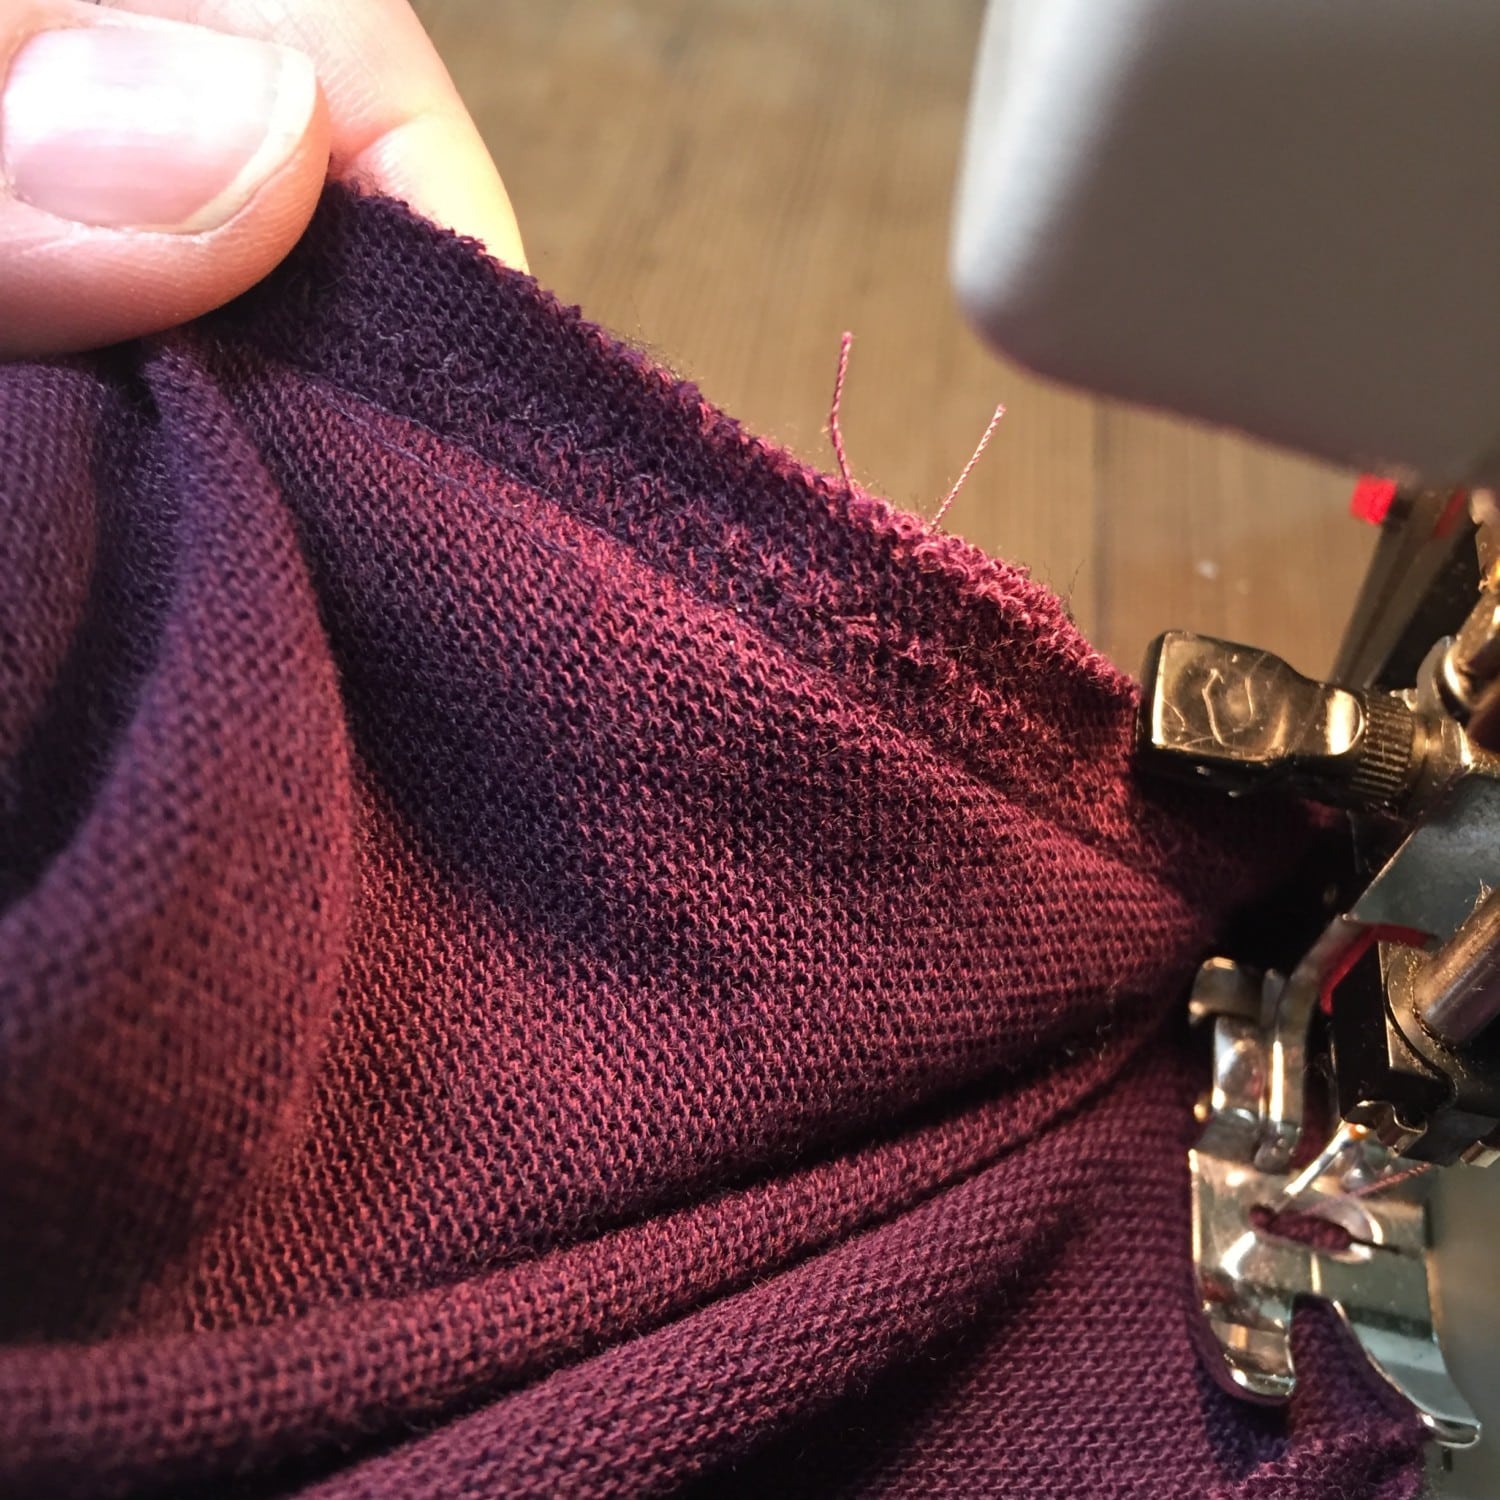 sewing sweater photo